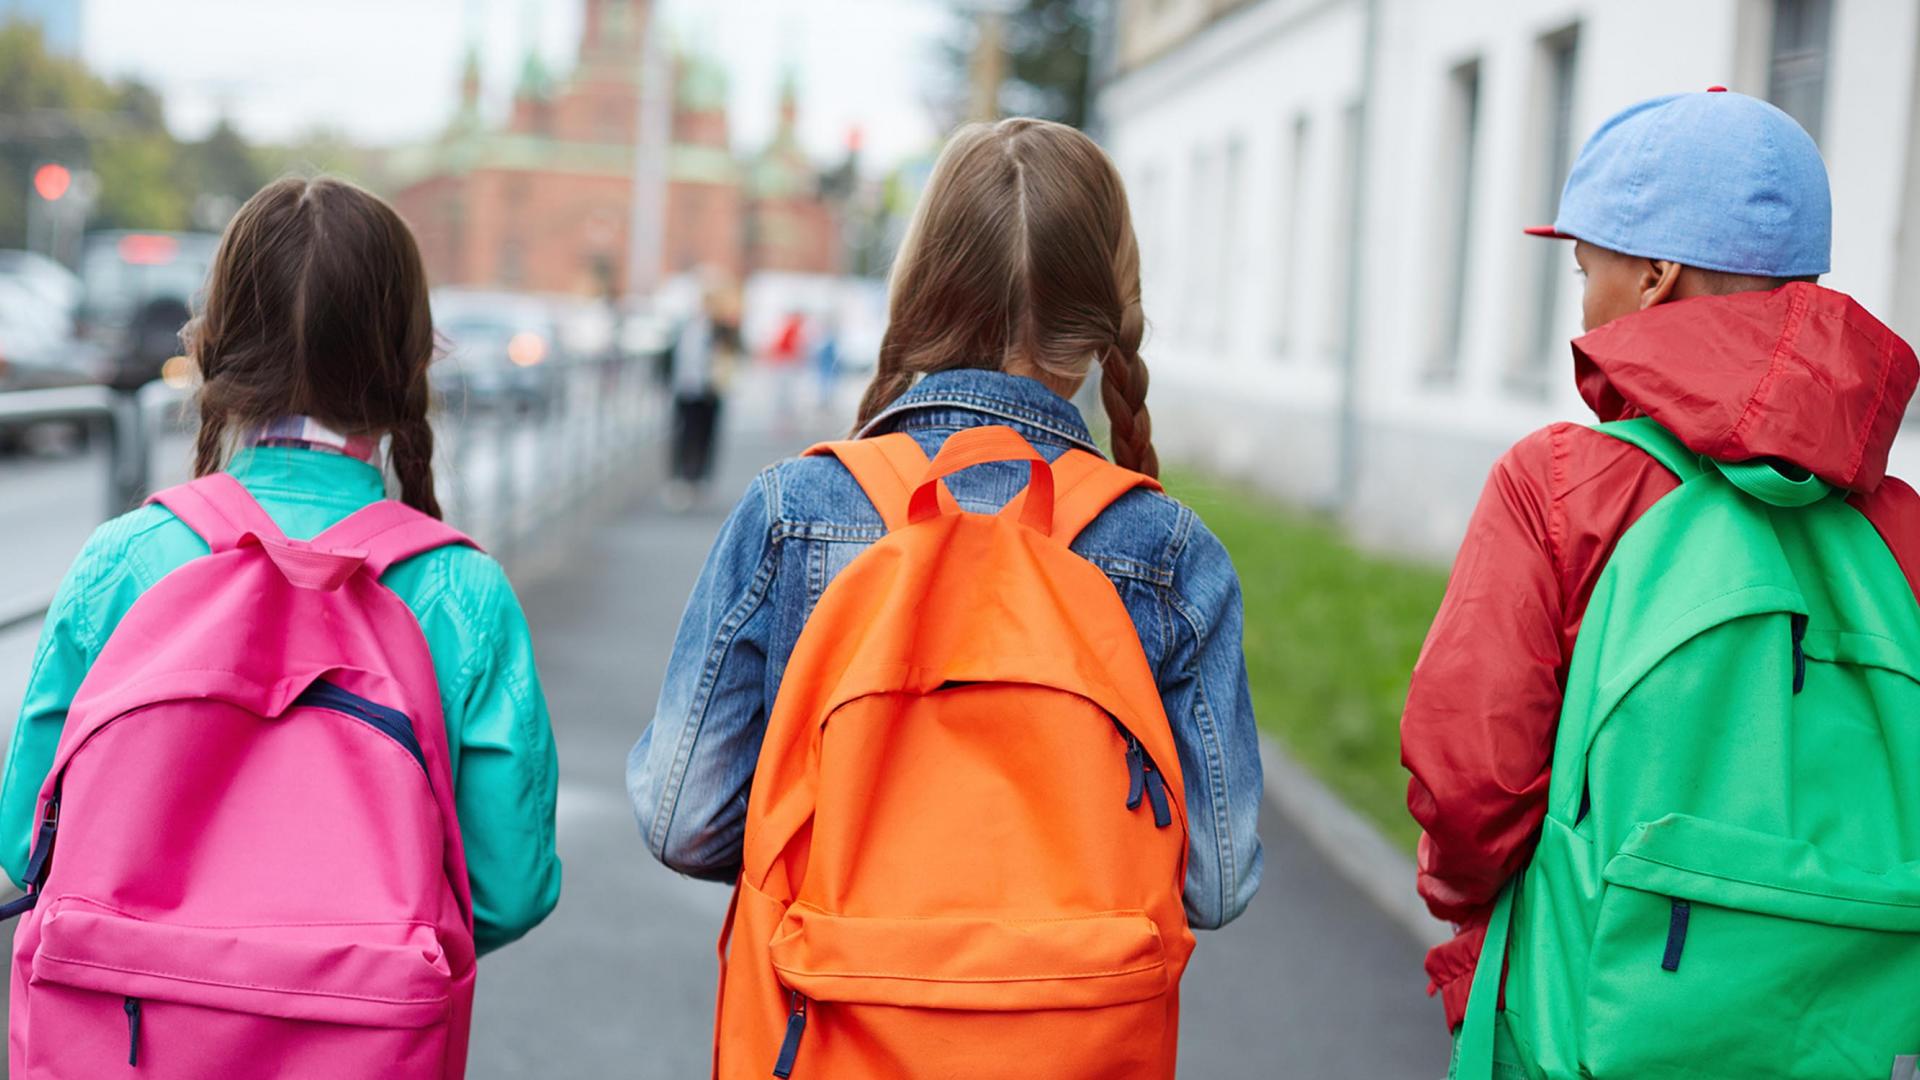 Children going to school